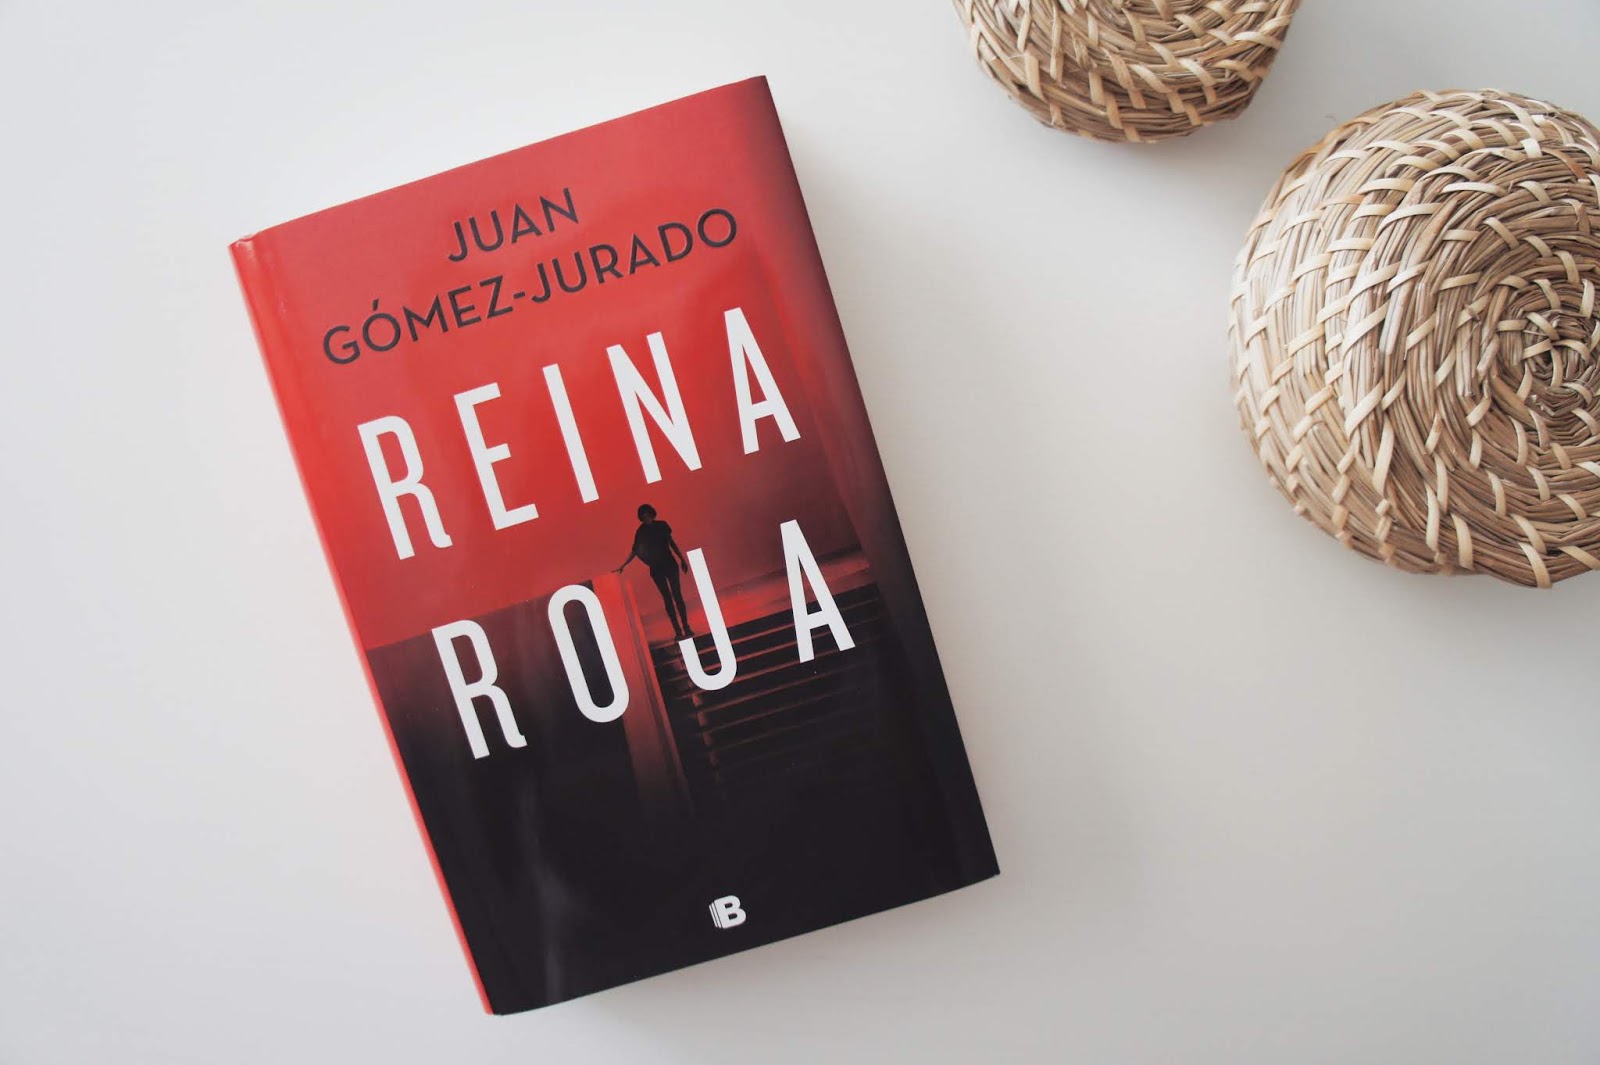 Reina Roja: El Thriller de Intriga de Juan Gómez-Jurado.